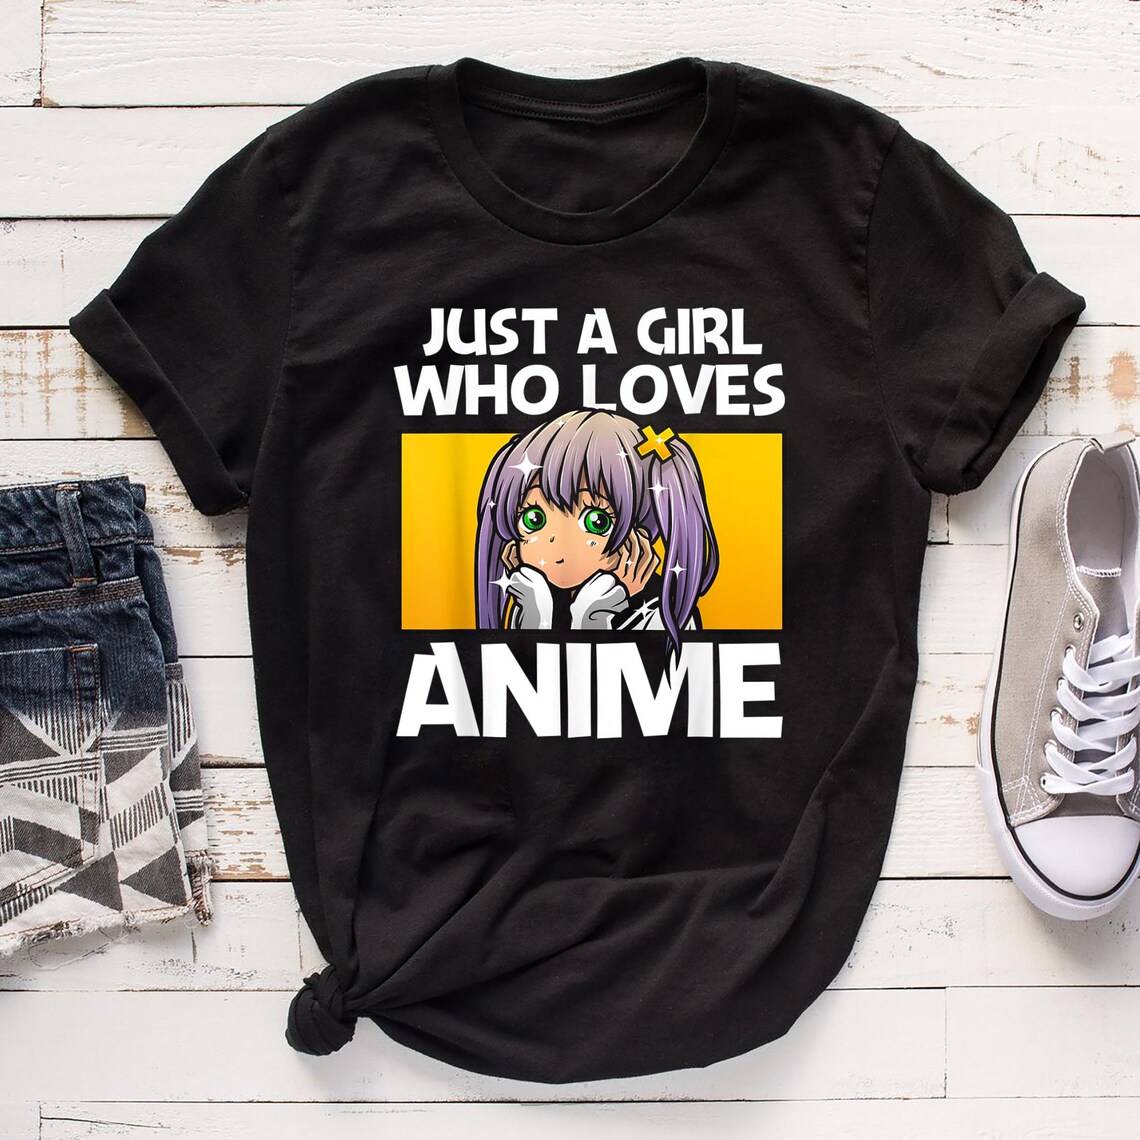 Just A Girl Who Loves Anime Shirt Kawaii Manga Fans | Etsy